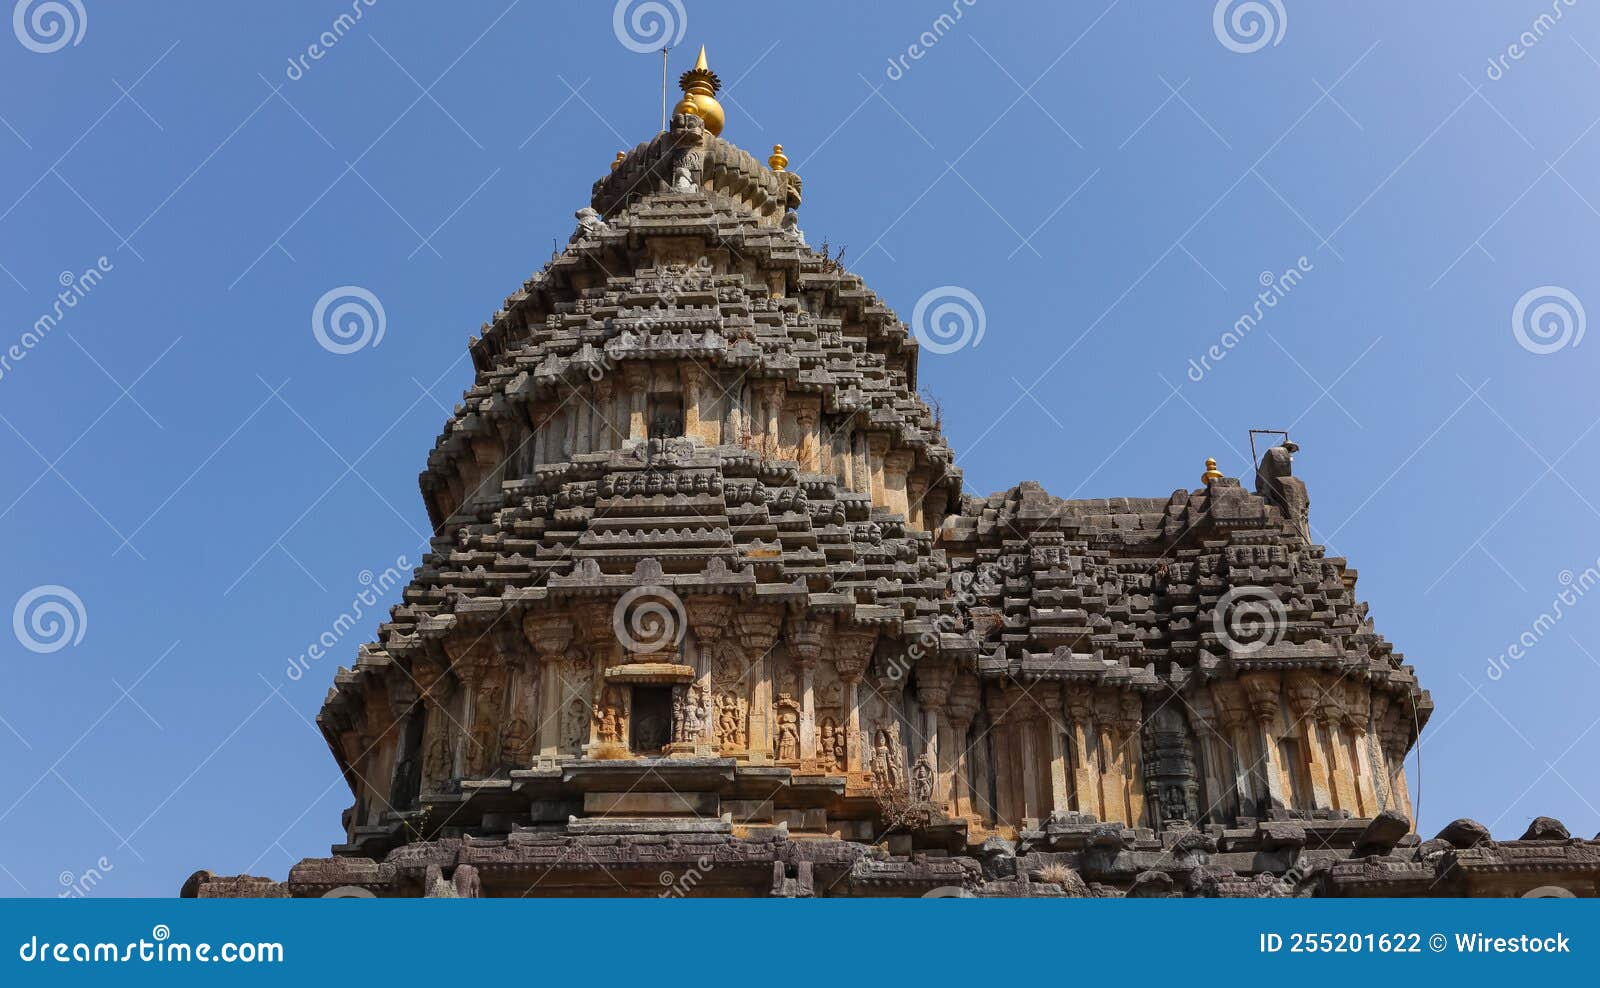 beautiful view of sri vidya shankara temple, sringeri, karnataka, india